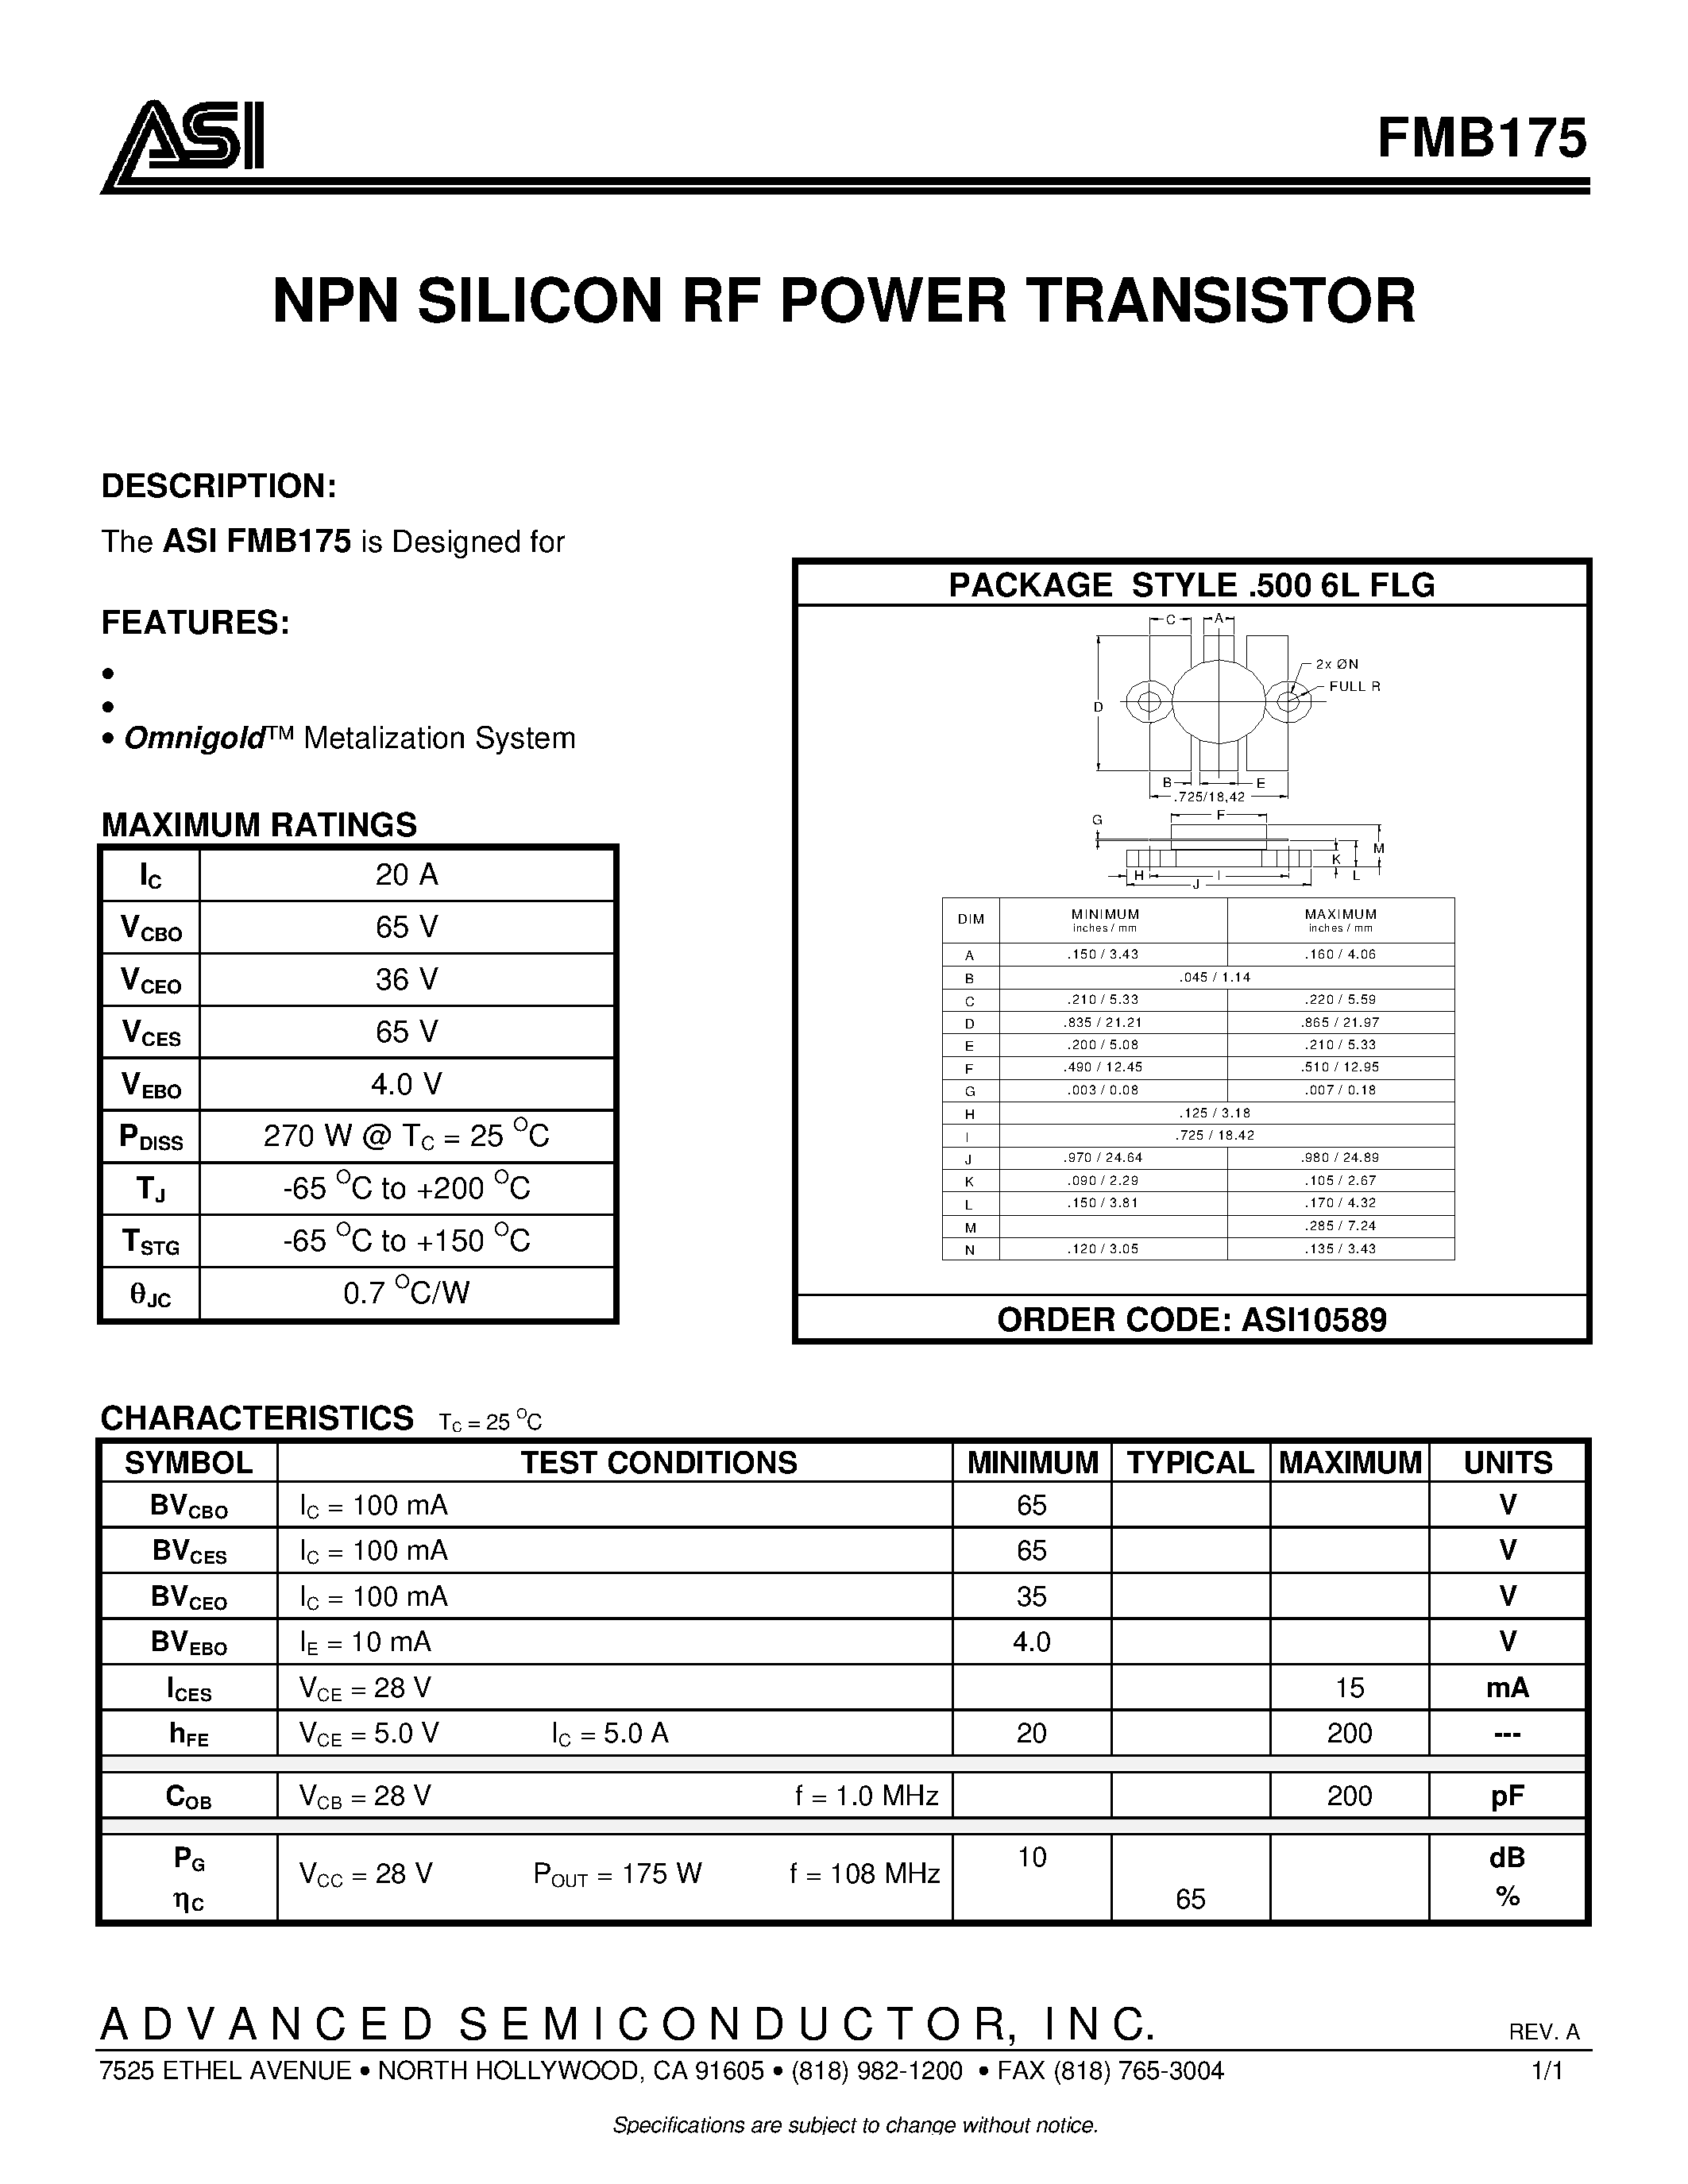 Datasheet FMB175 - NPN SILICON RF POWER TRANSISTOR page 1